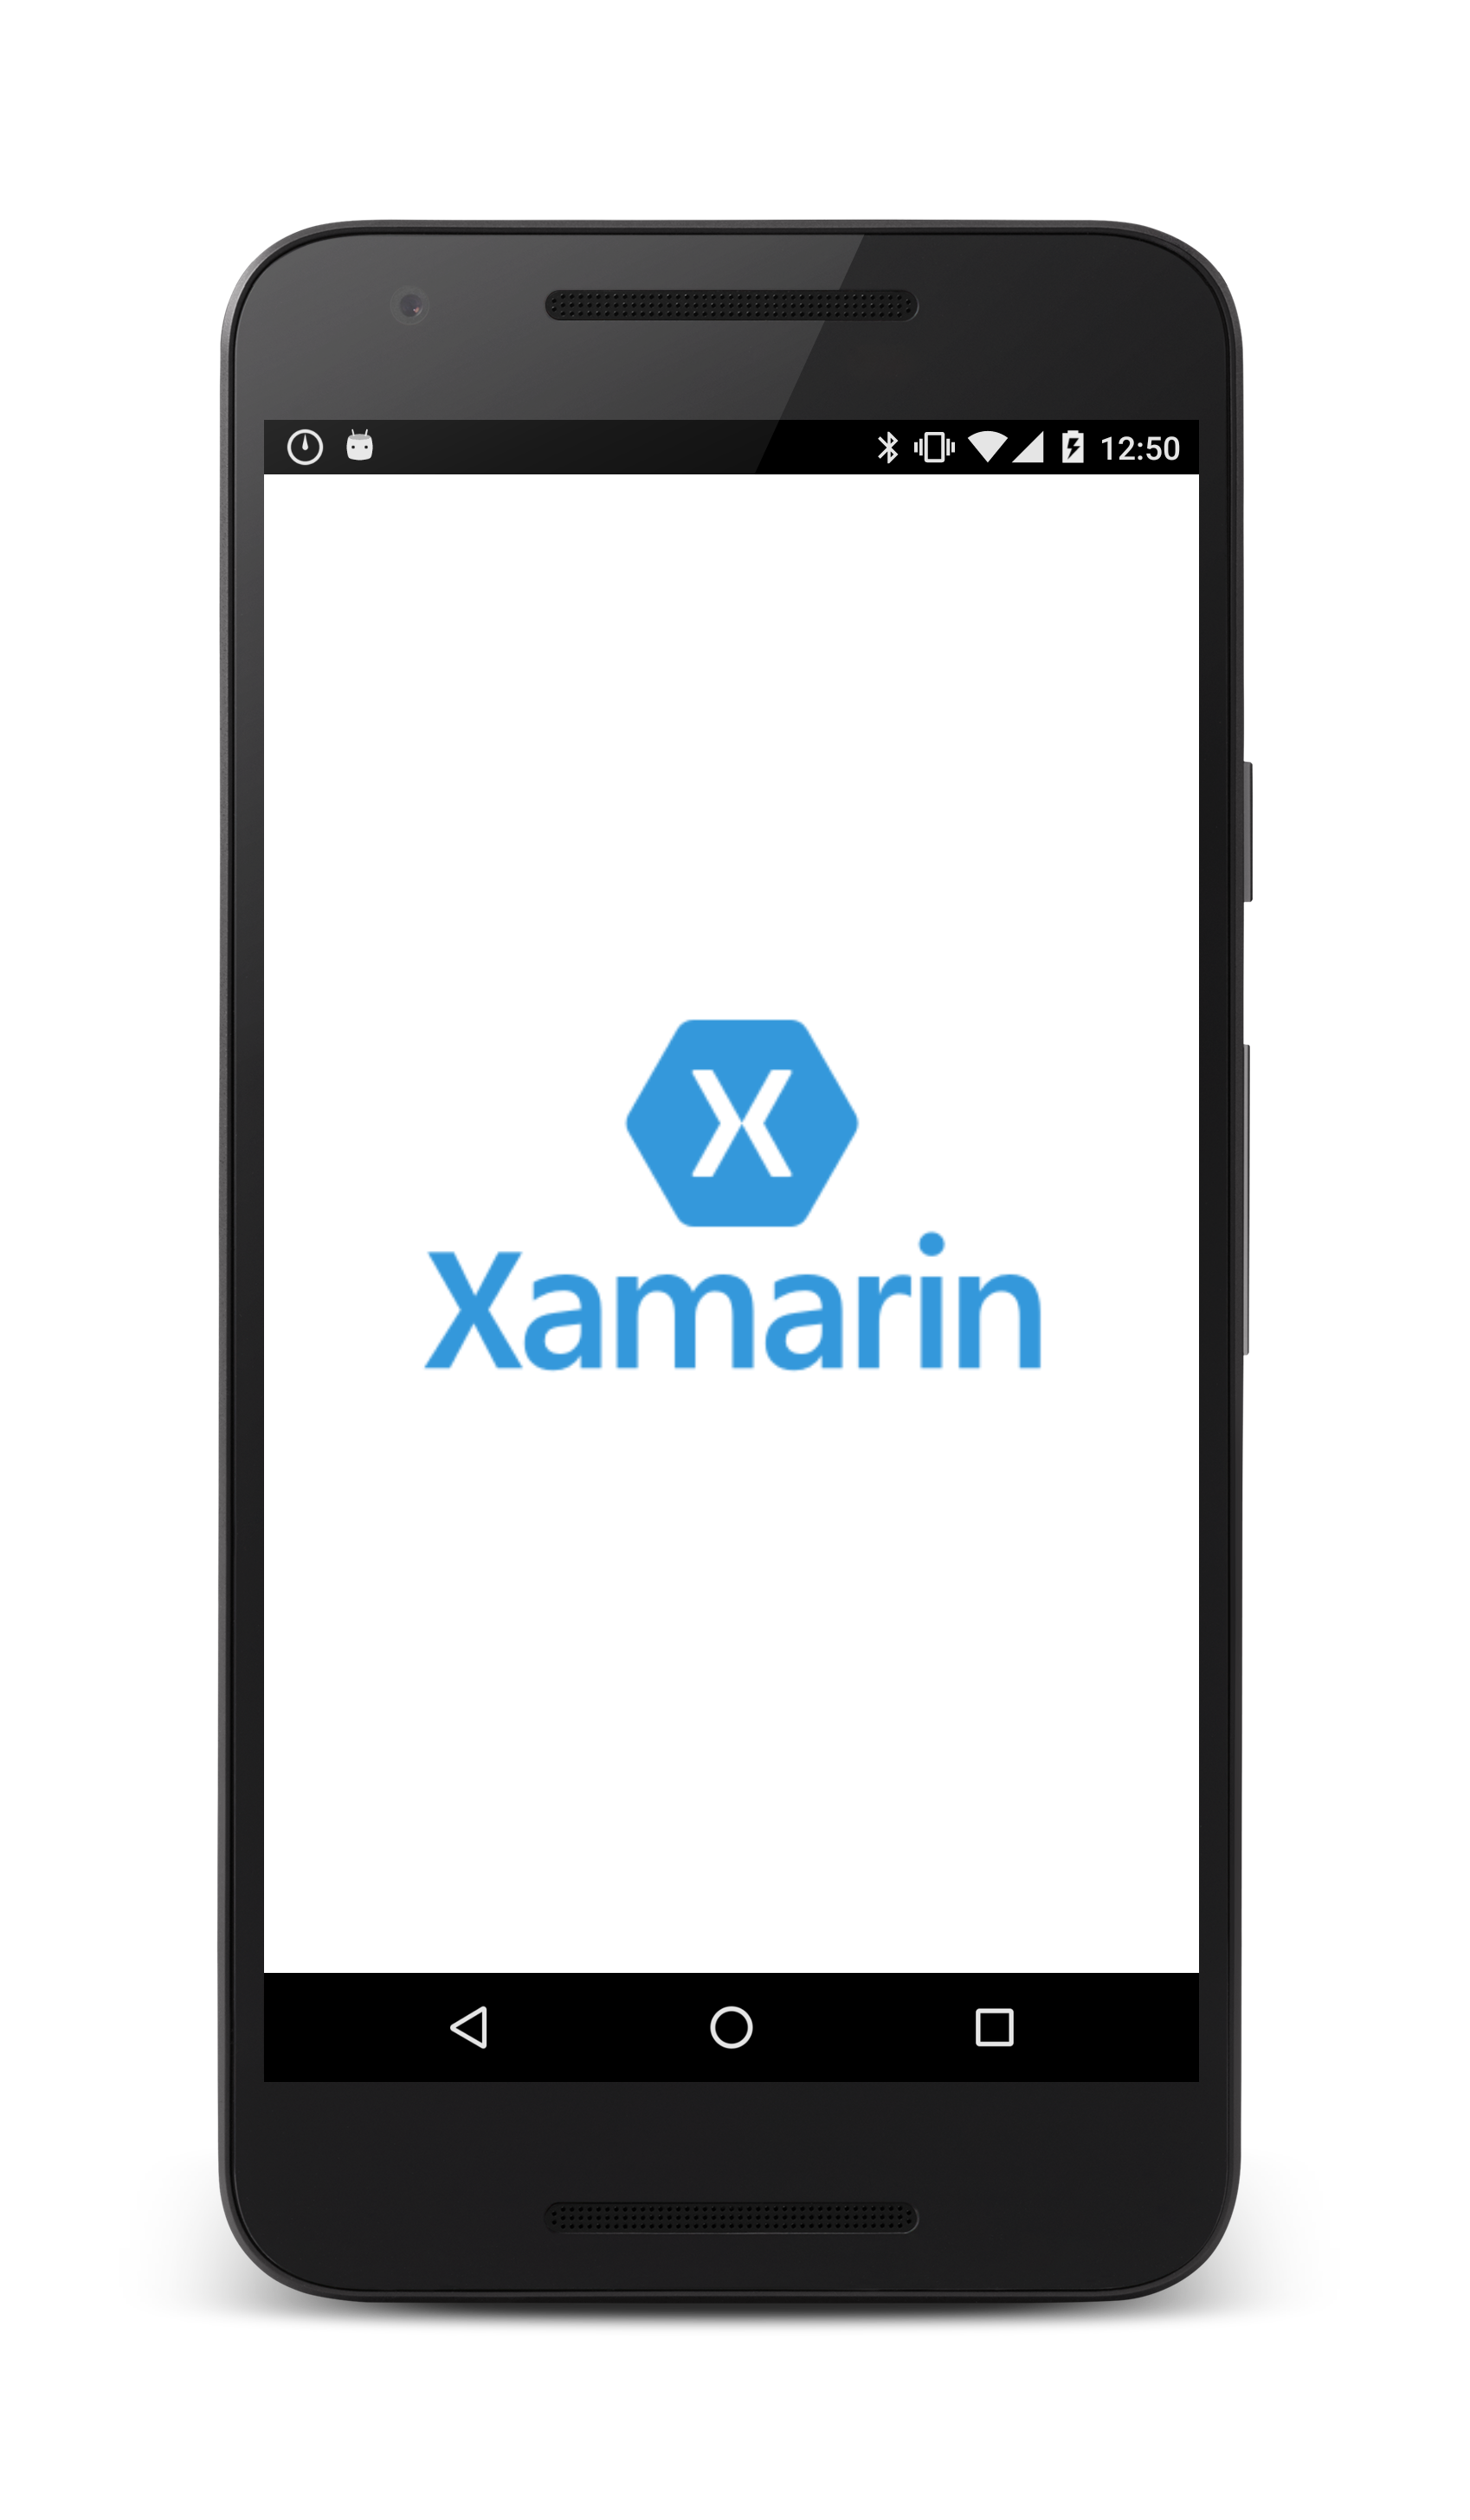 Xamarin logo splash screen